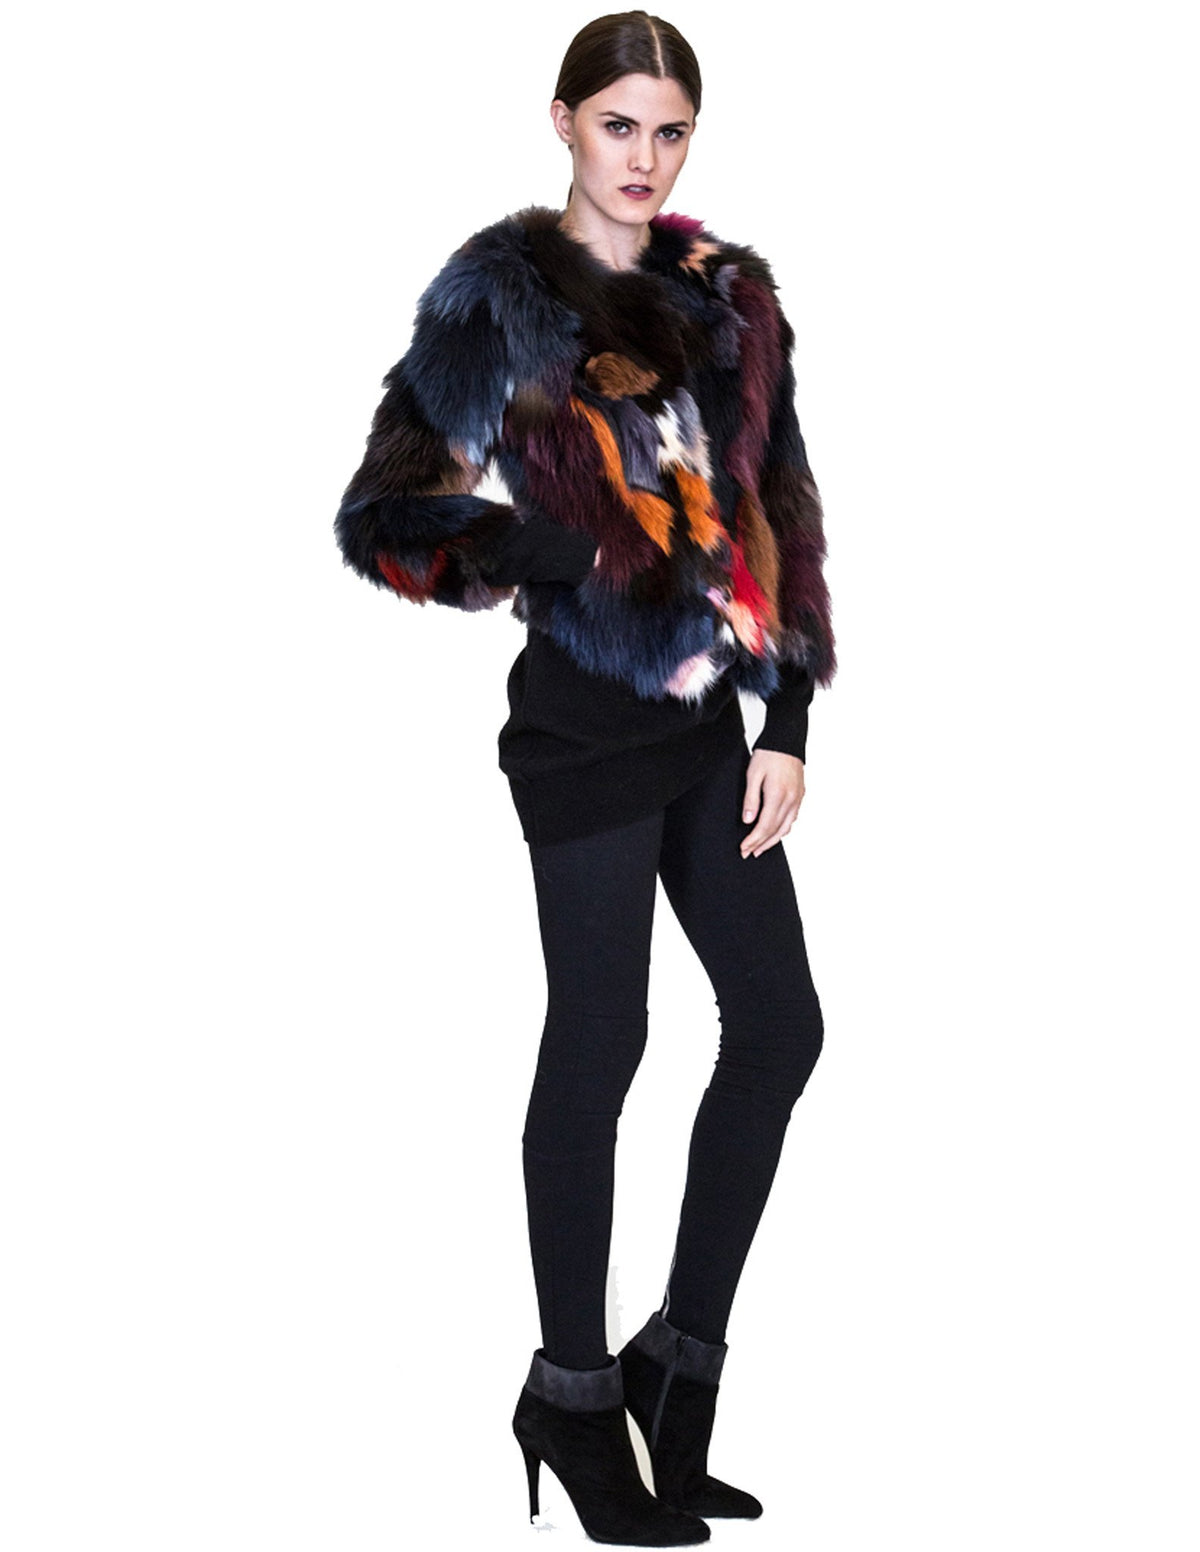 THE MIMI Full Skin Fox Fur Jacket - paulamariecollection